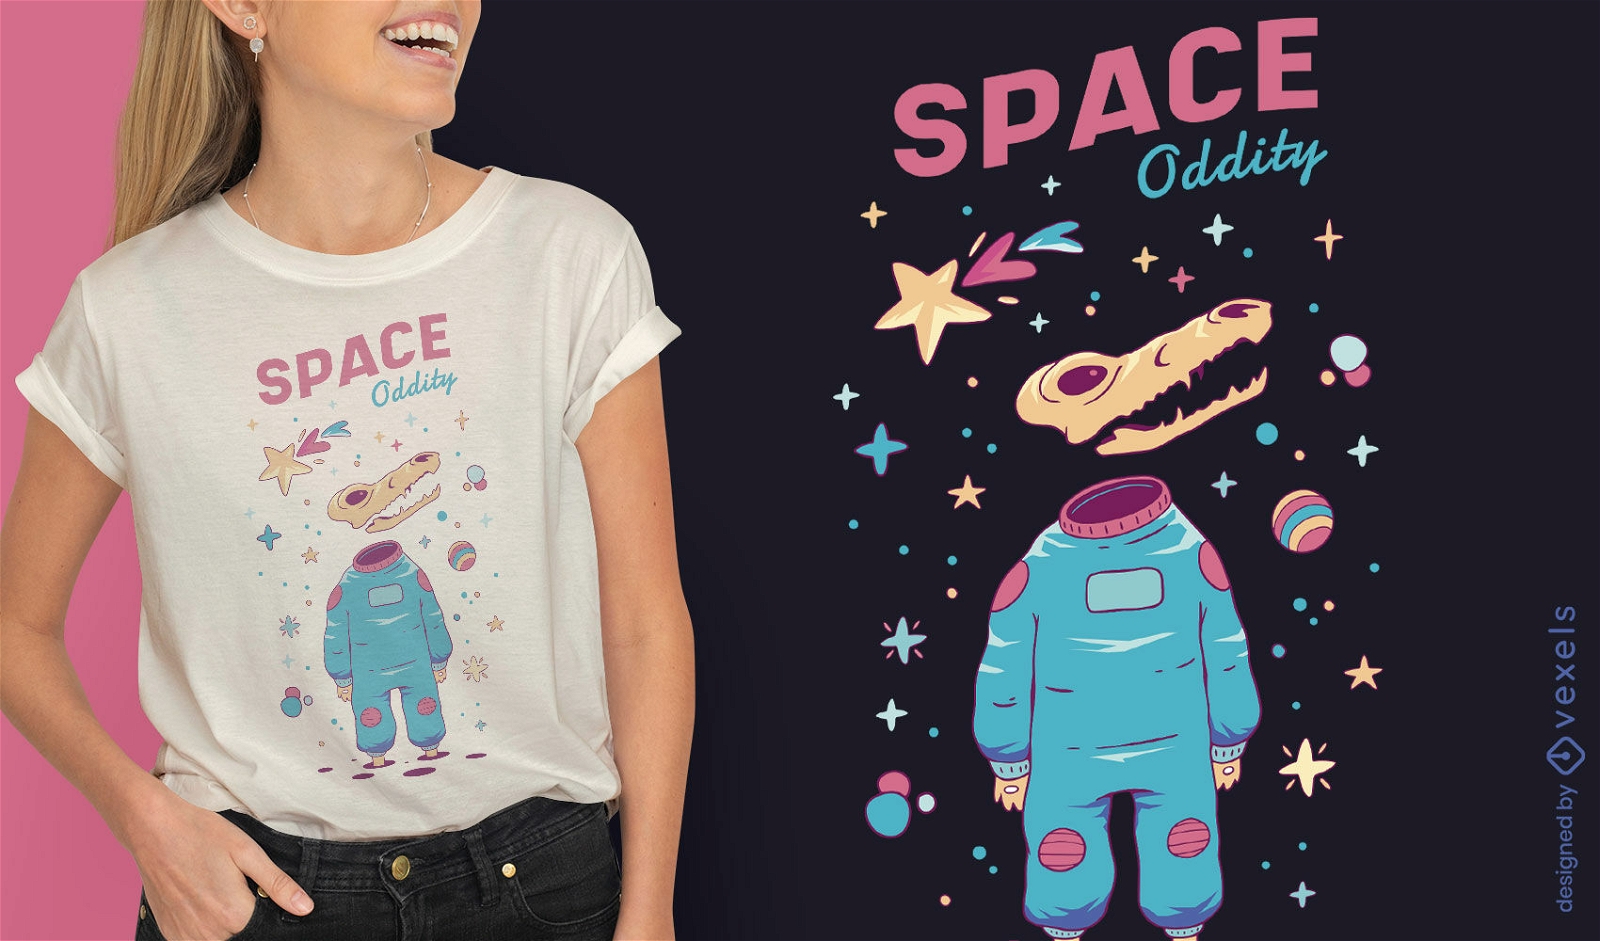 Space oddity skull astronaut t-shirt design